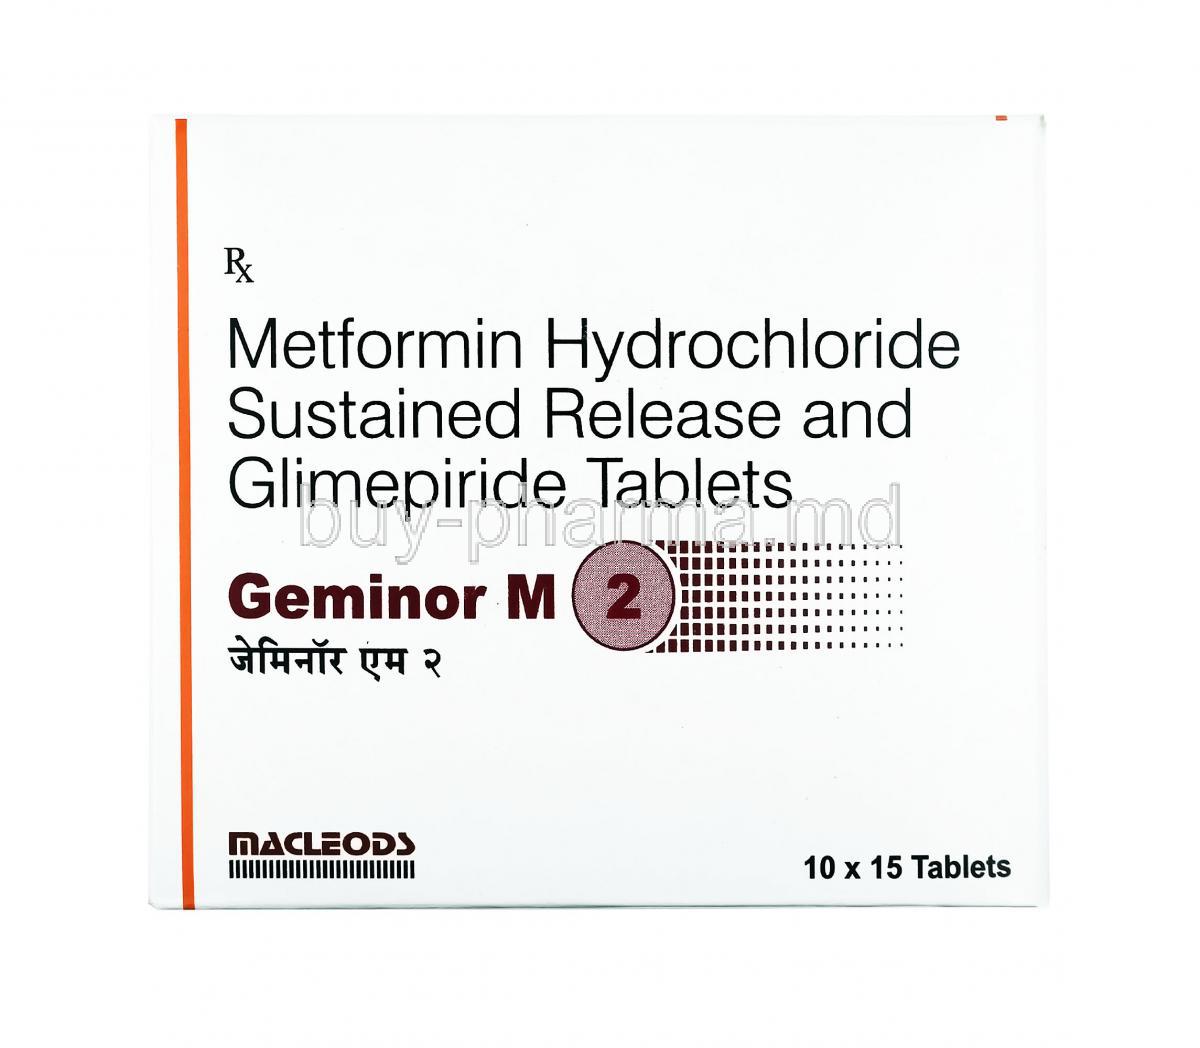 Geminor M 2mg, Glimepiride and Metformin